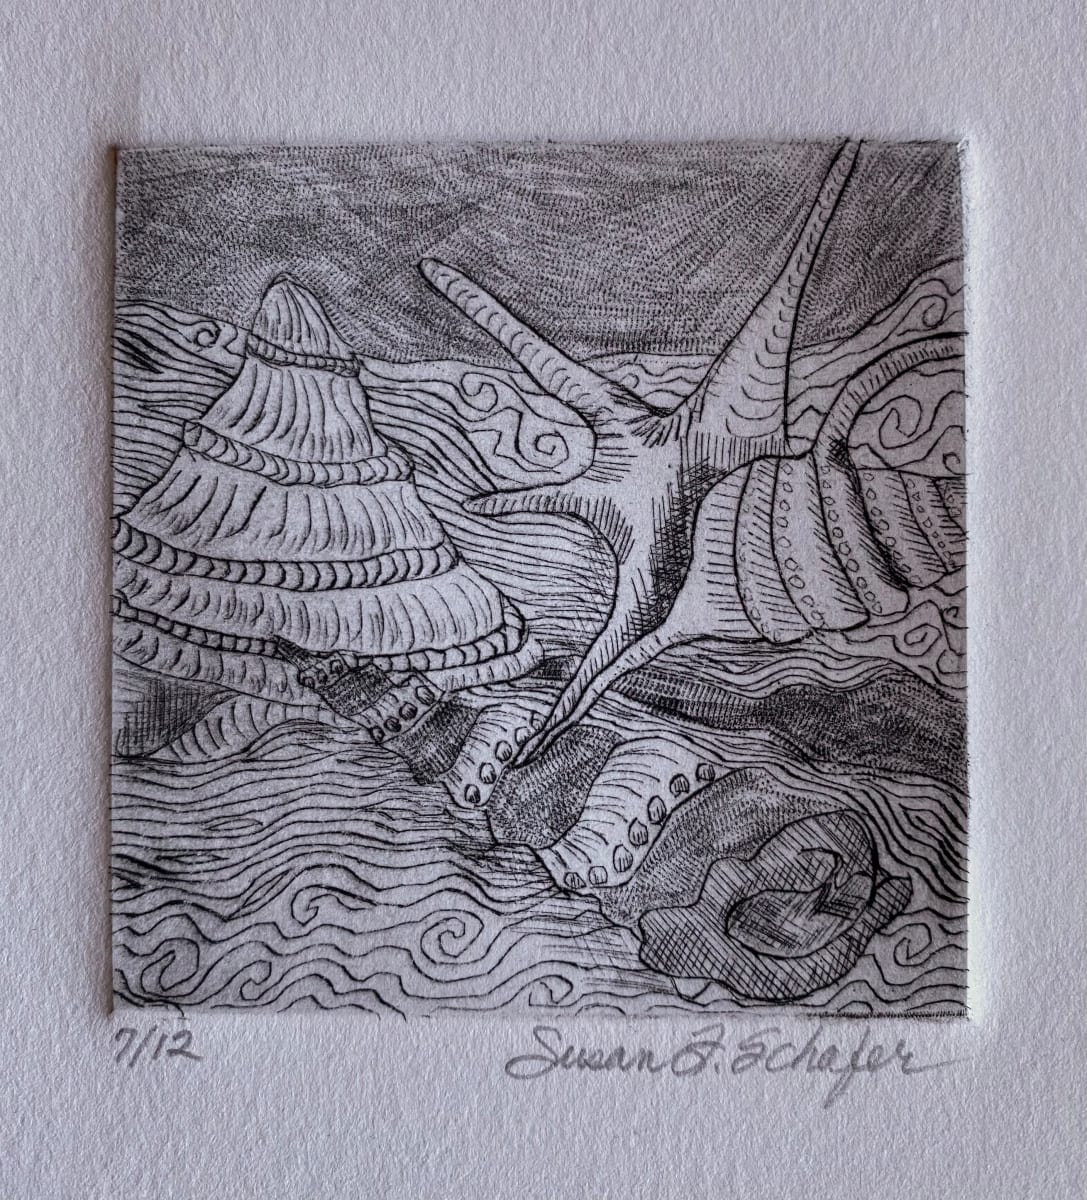 Three Shells 7/12 by Susan F. Schafer